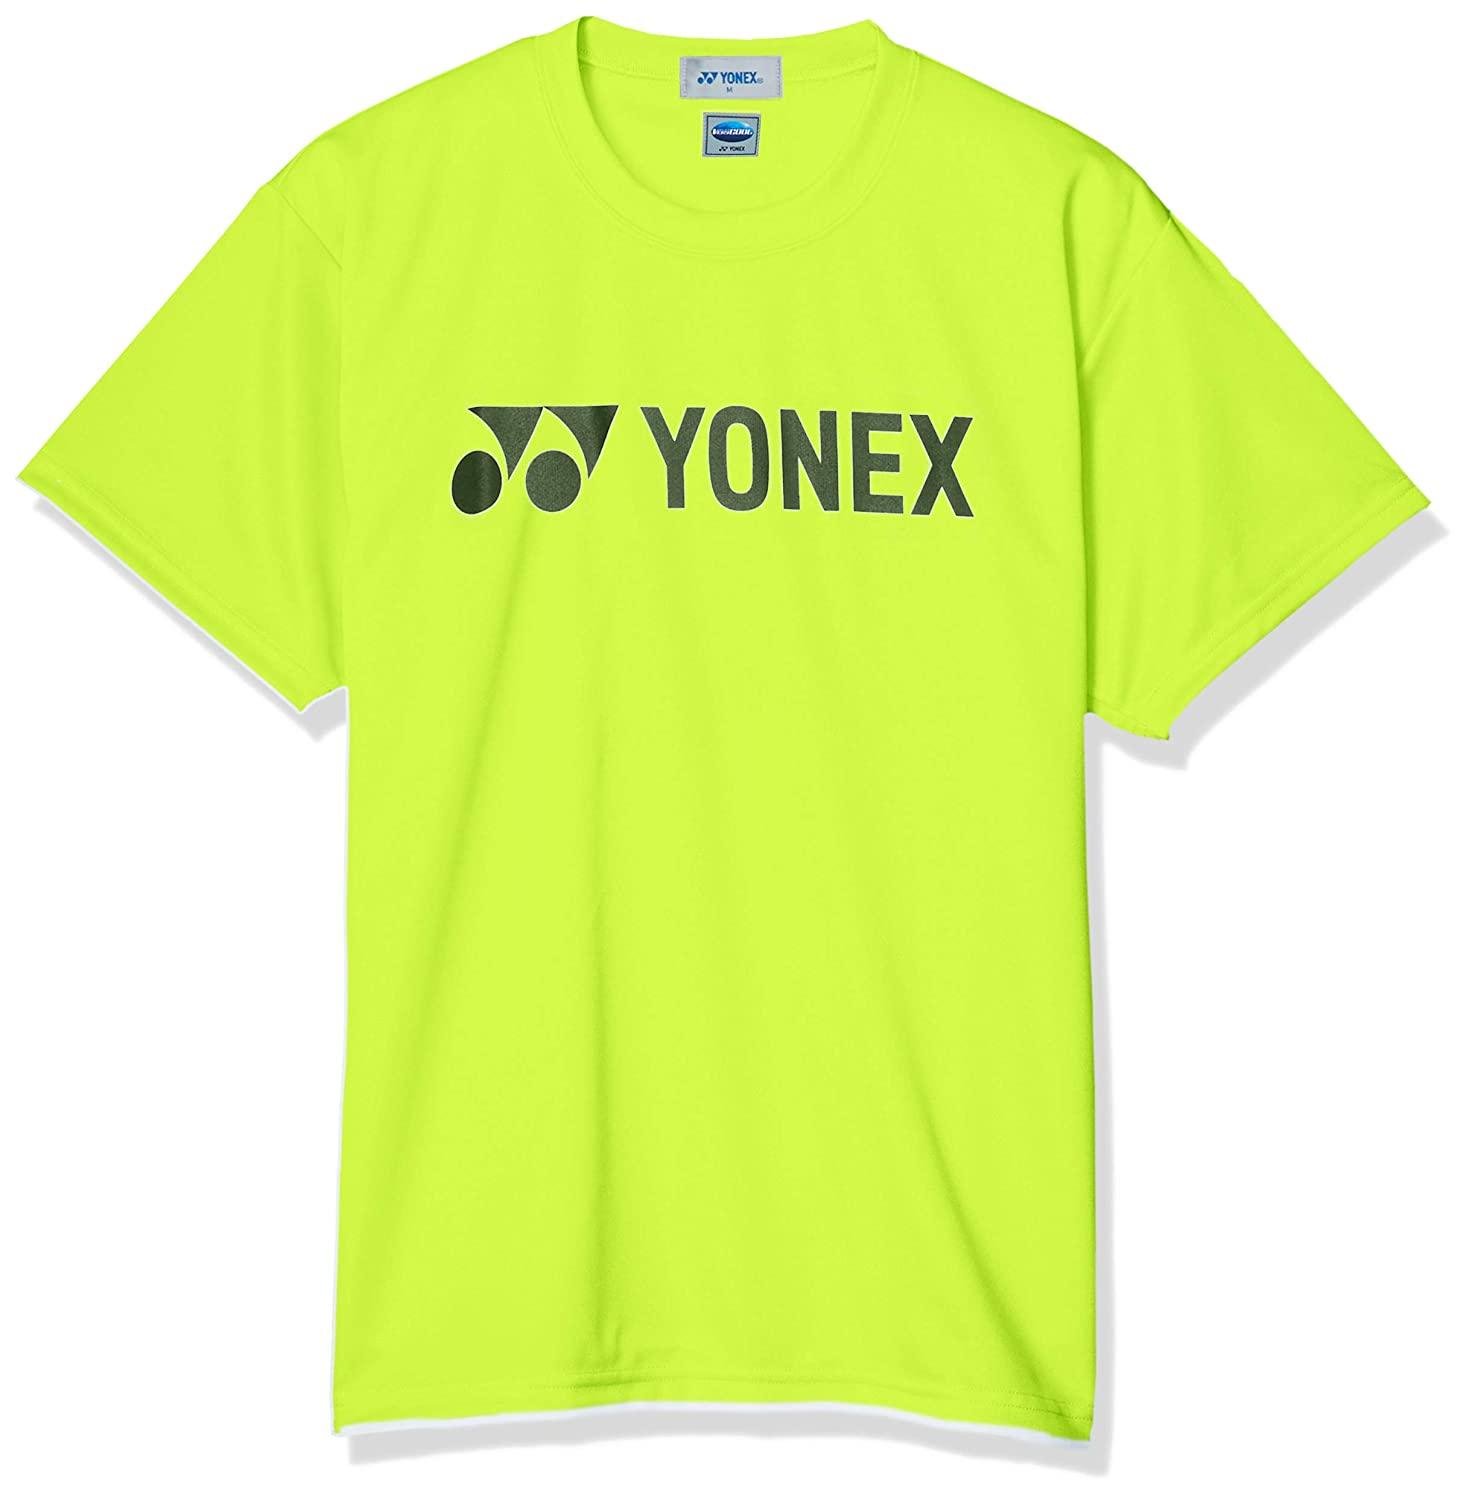 jhCeB[Vc (16501) [F : VCCG[] [TCY : L] YONEX lbNX